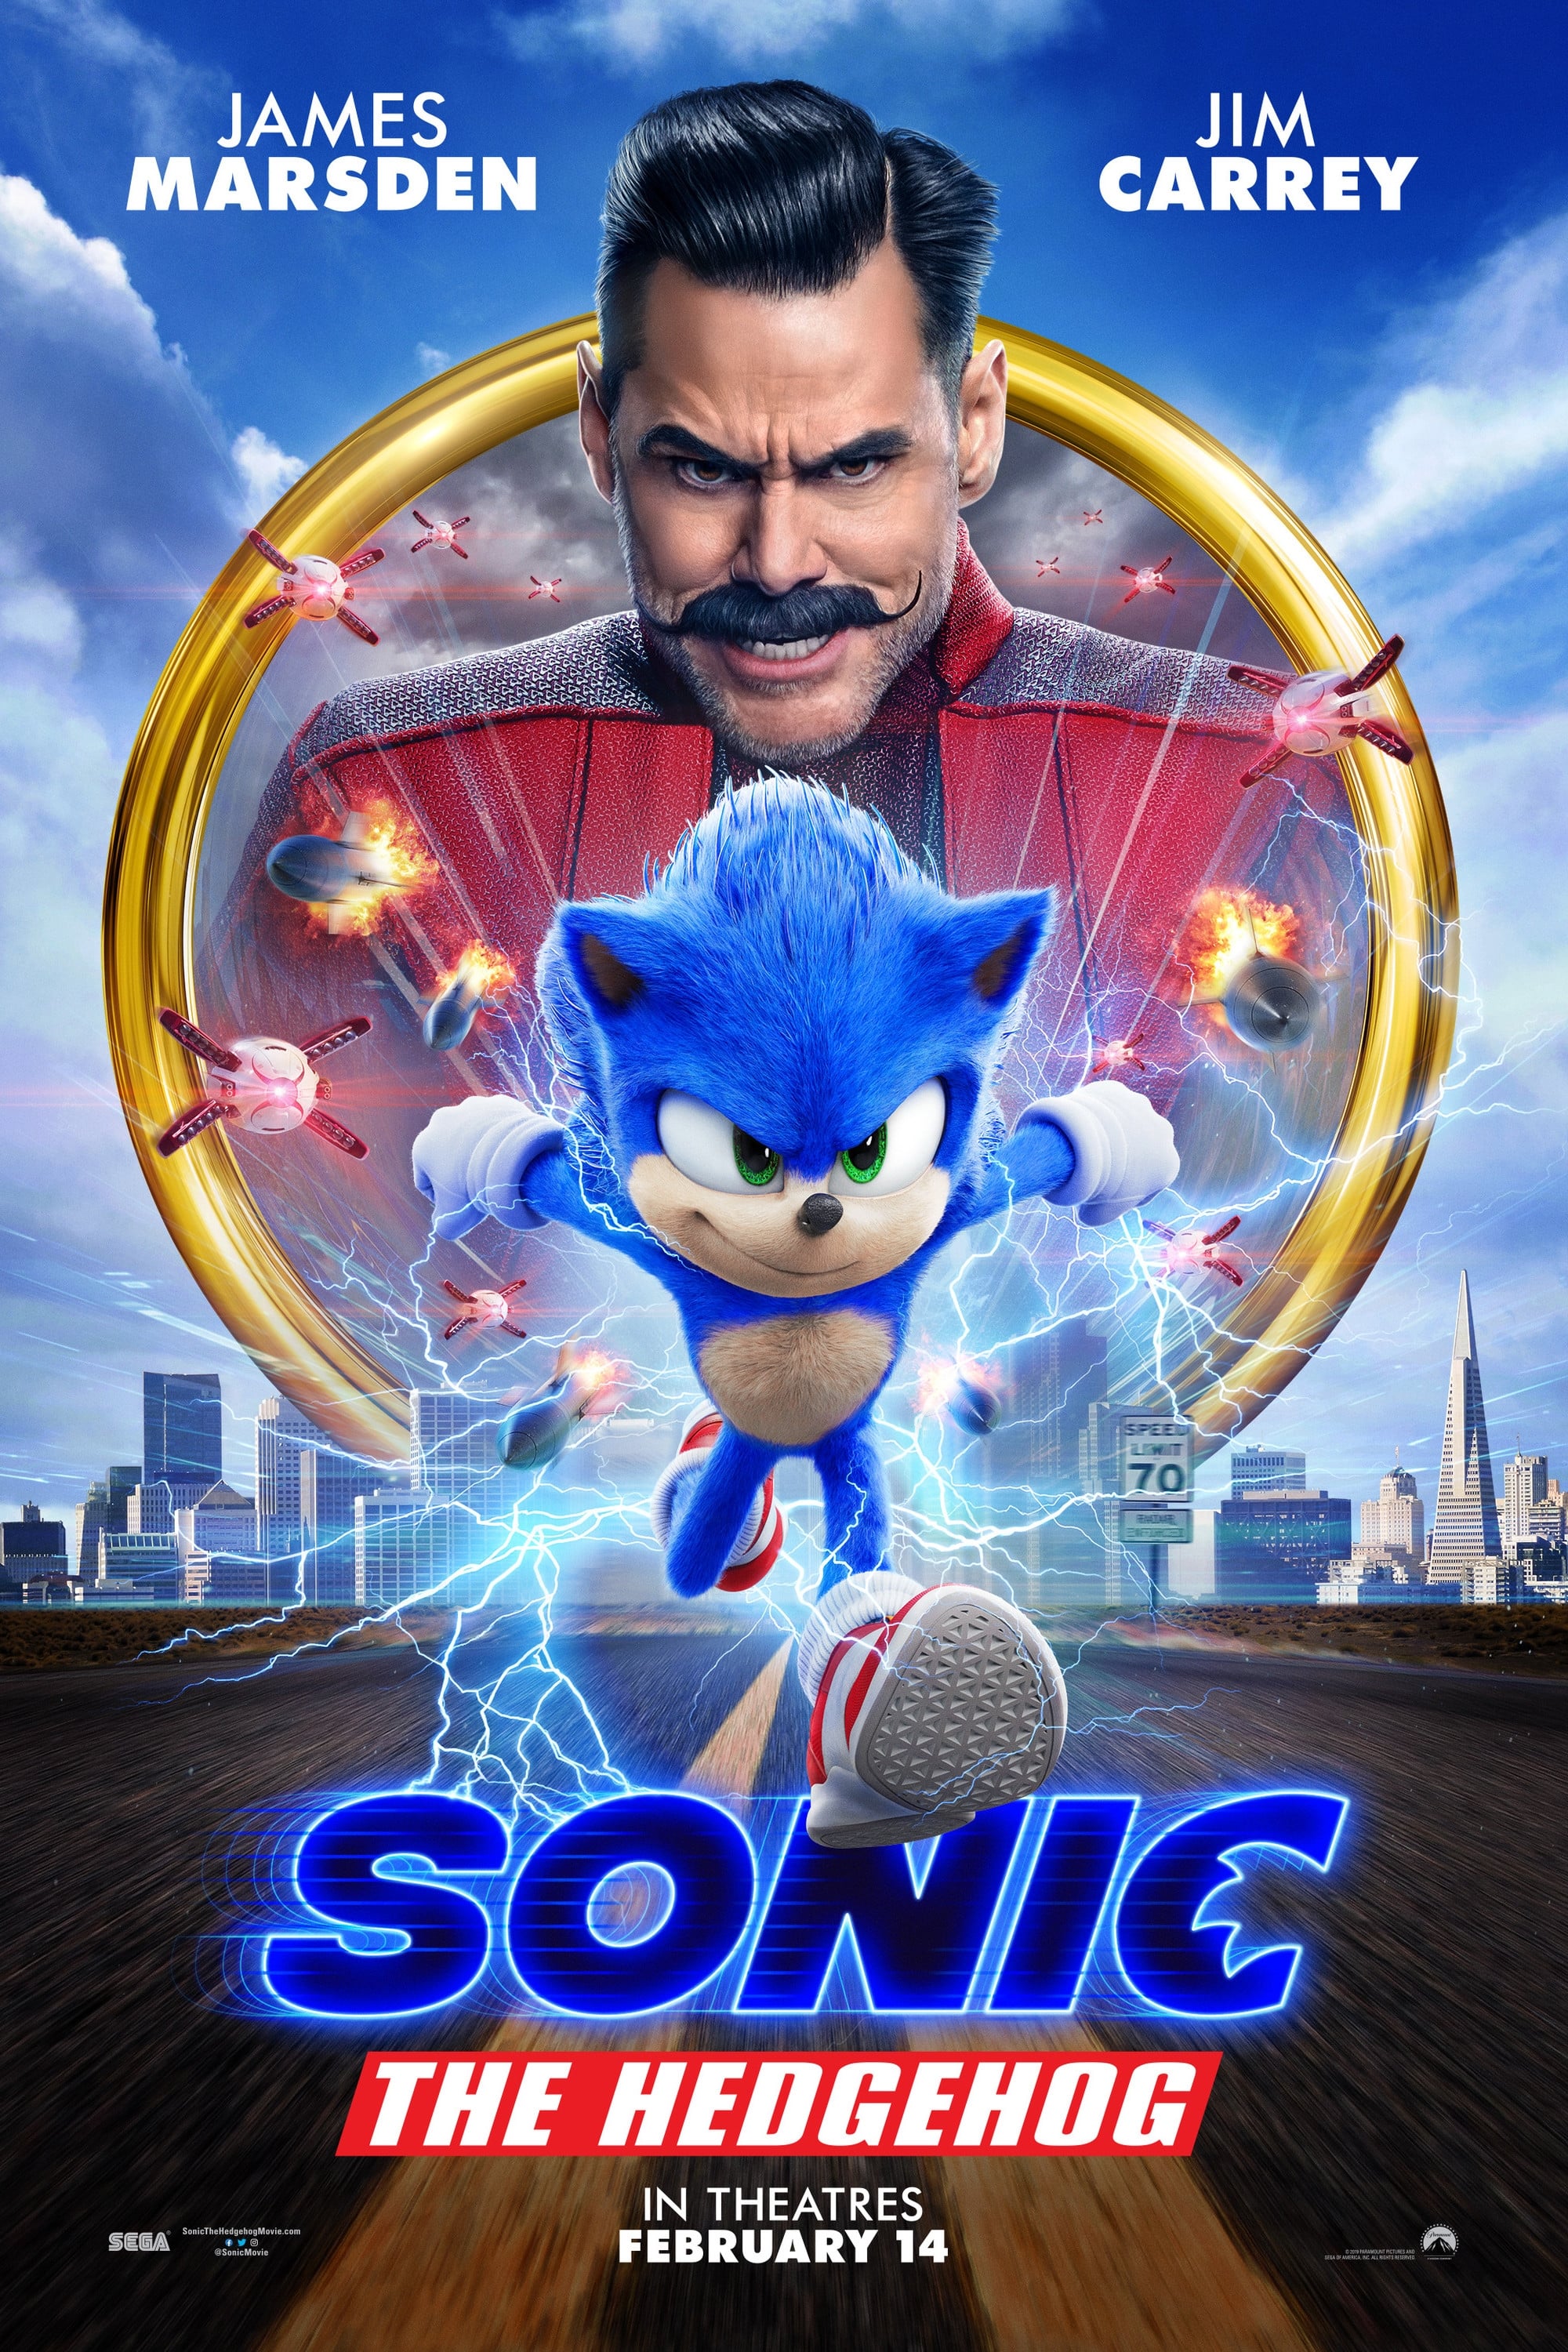 Sonic the hedgehog film poster.jpeg